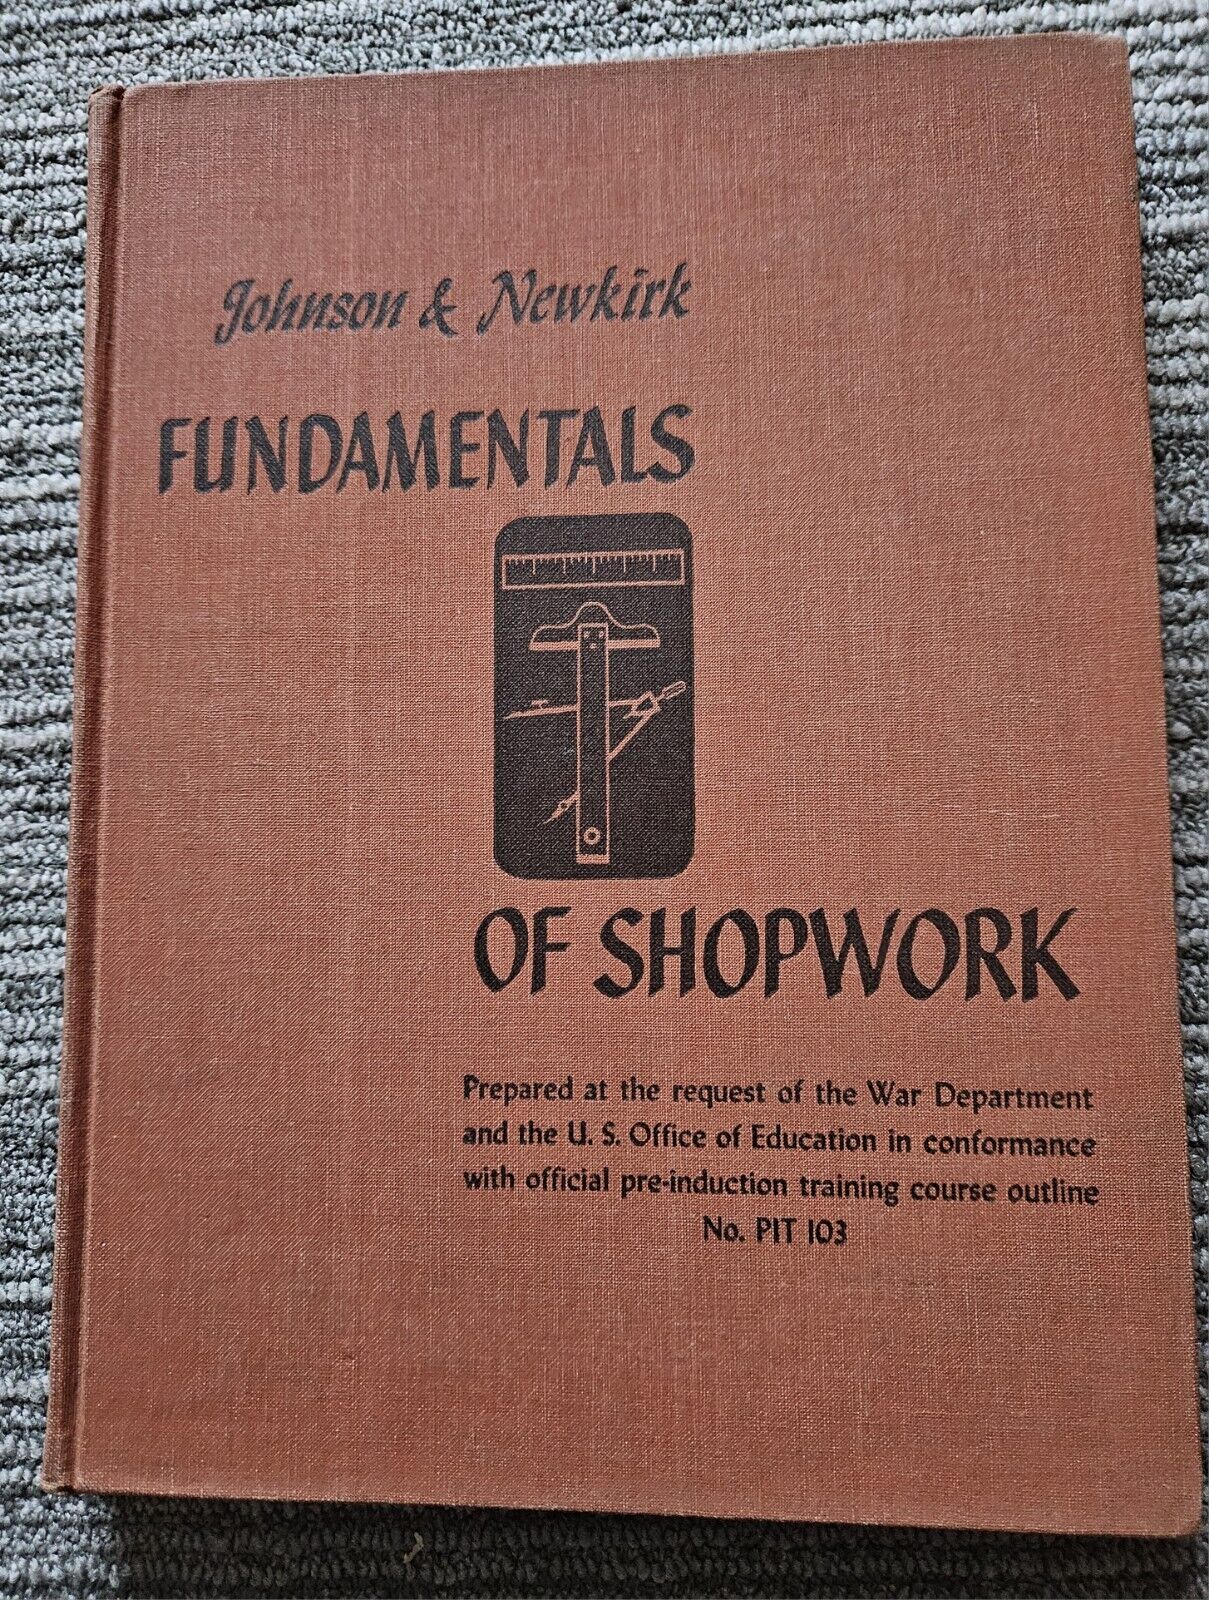 Fundamentals Of Shopwork: Prepared At Request Of War Department